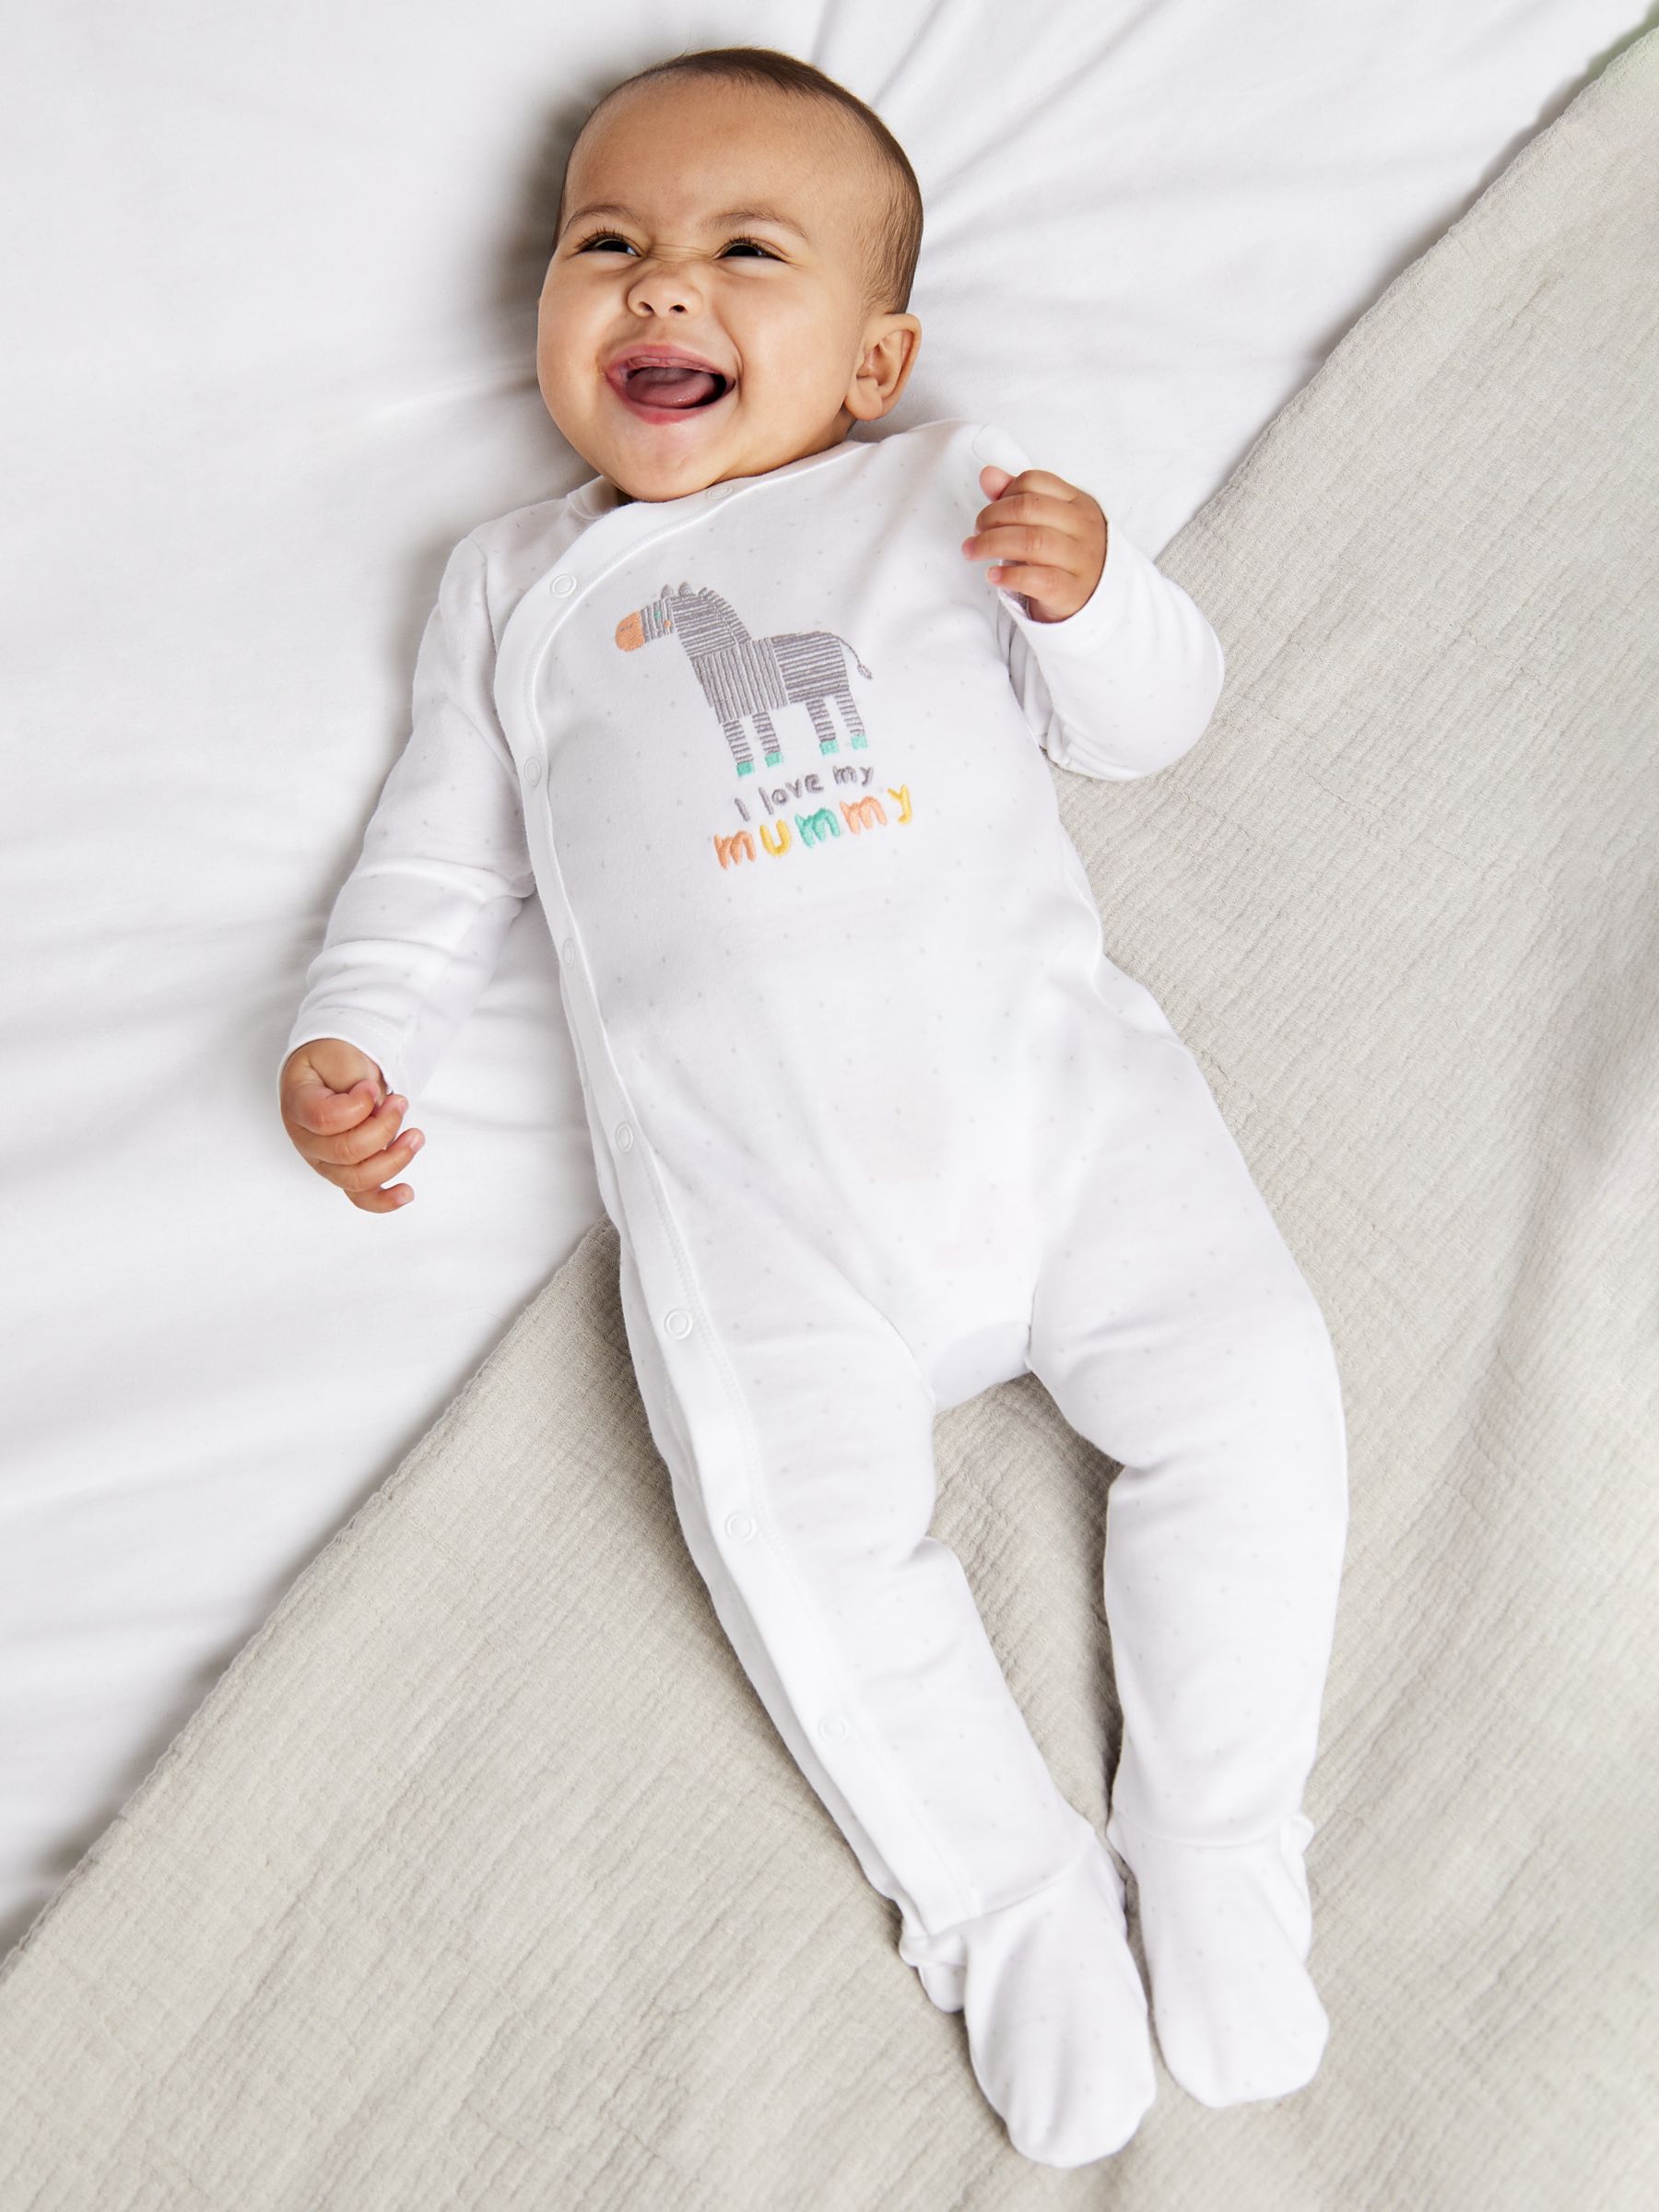 Mini Cuddles Baby Zebra Sleepsuit, White, Newborn